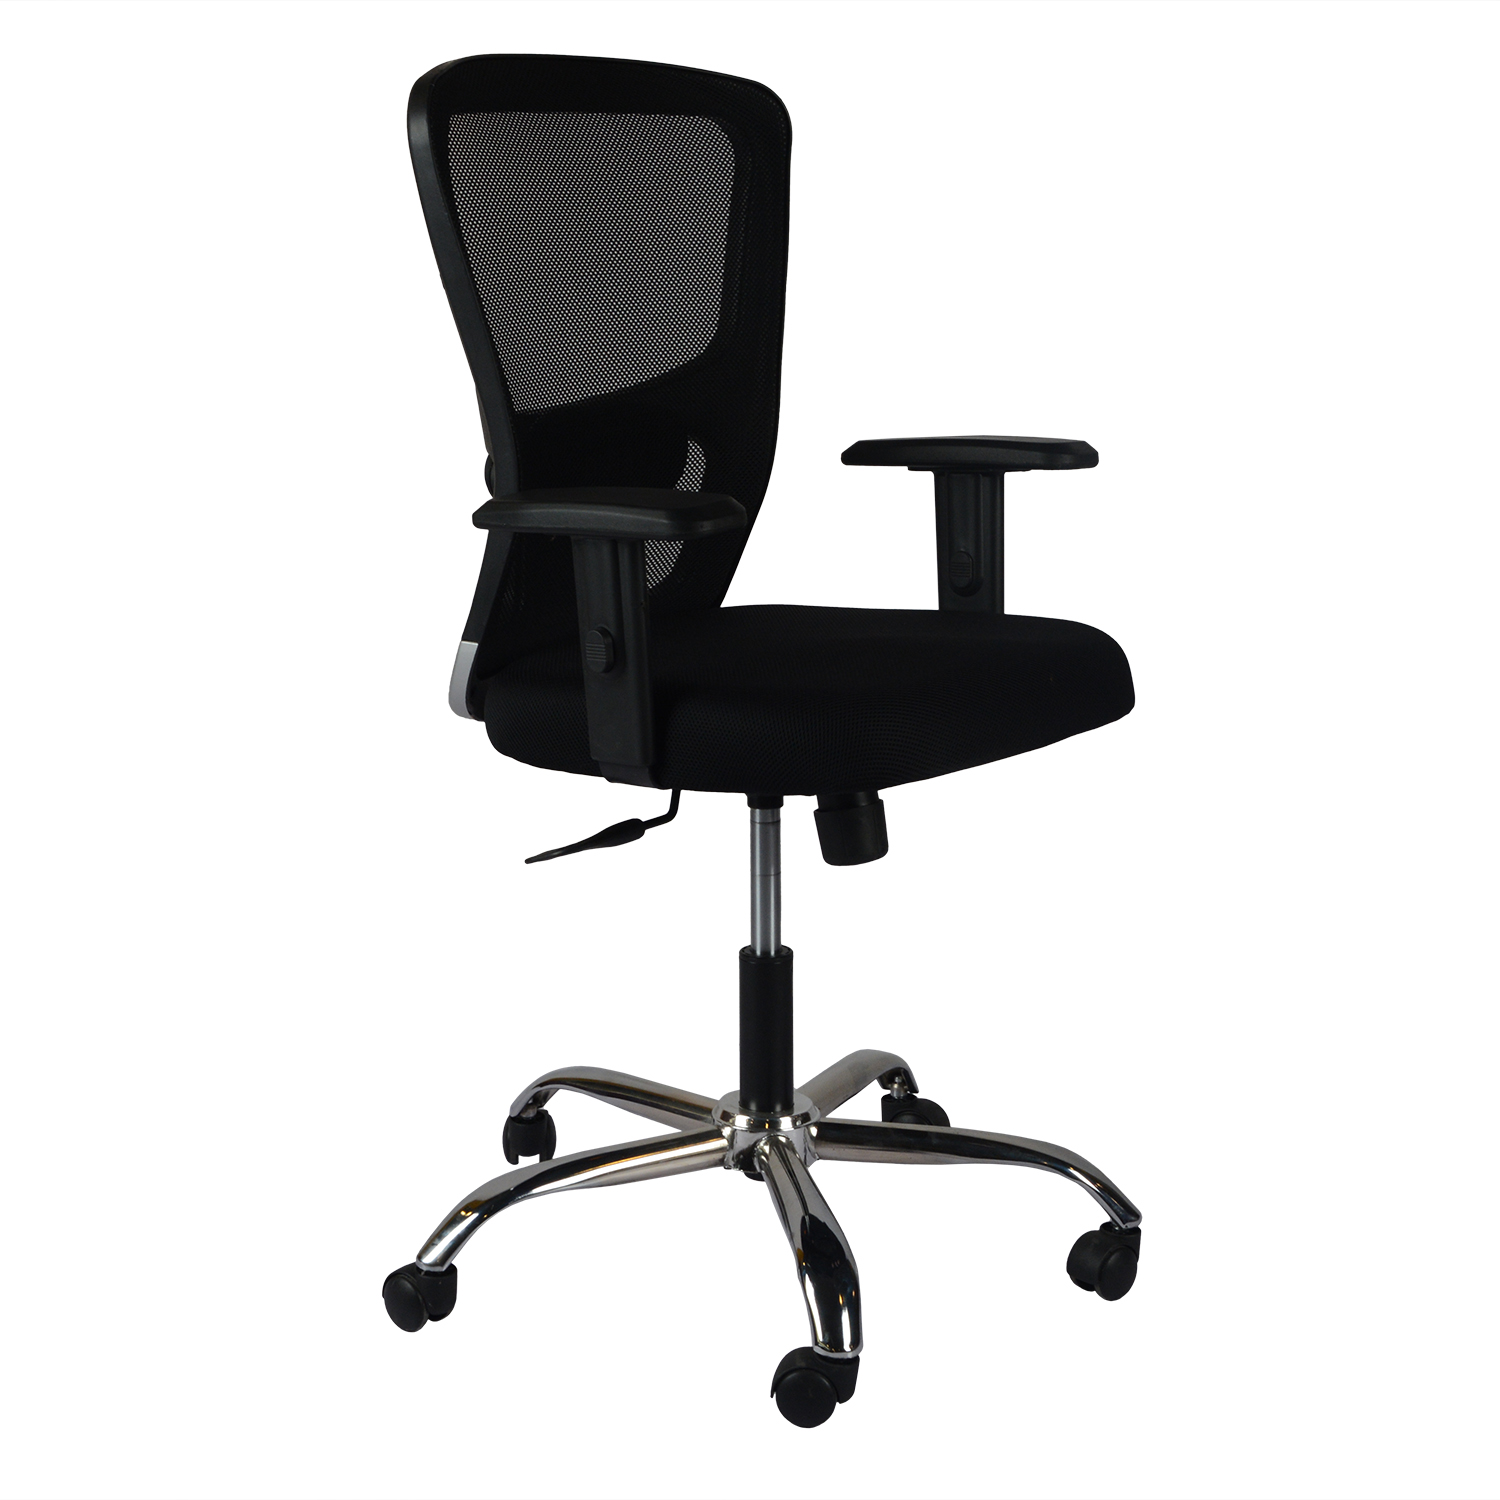 PST Jazz Mb Medium Back Chair||Black||Office Chair